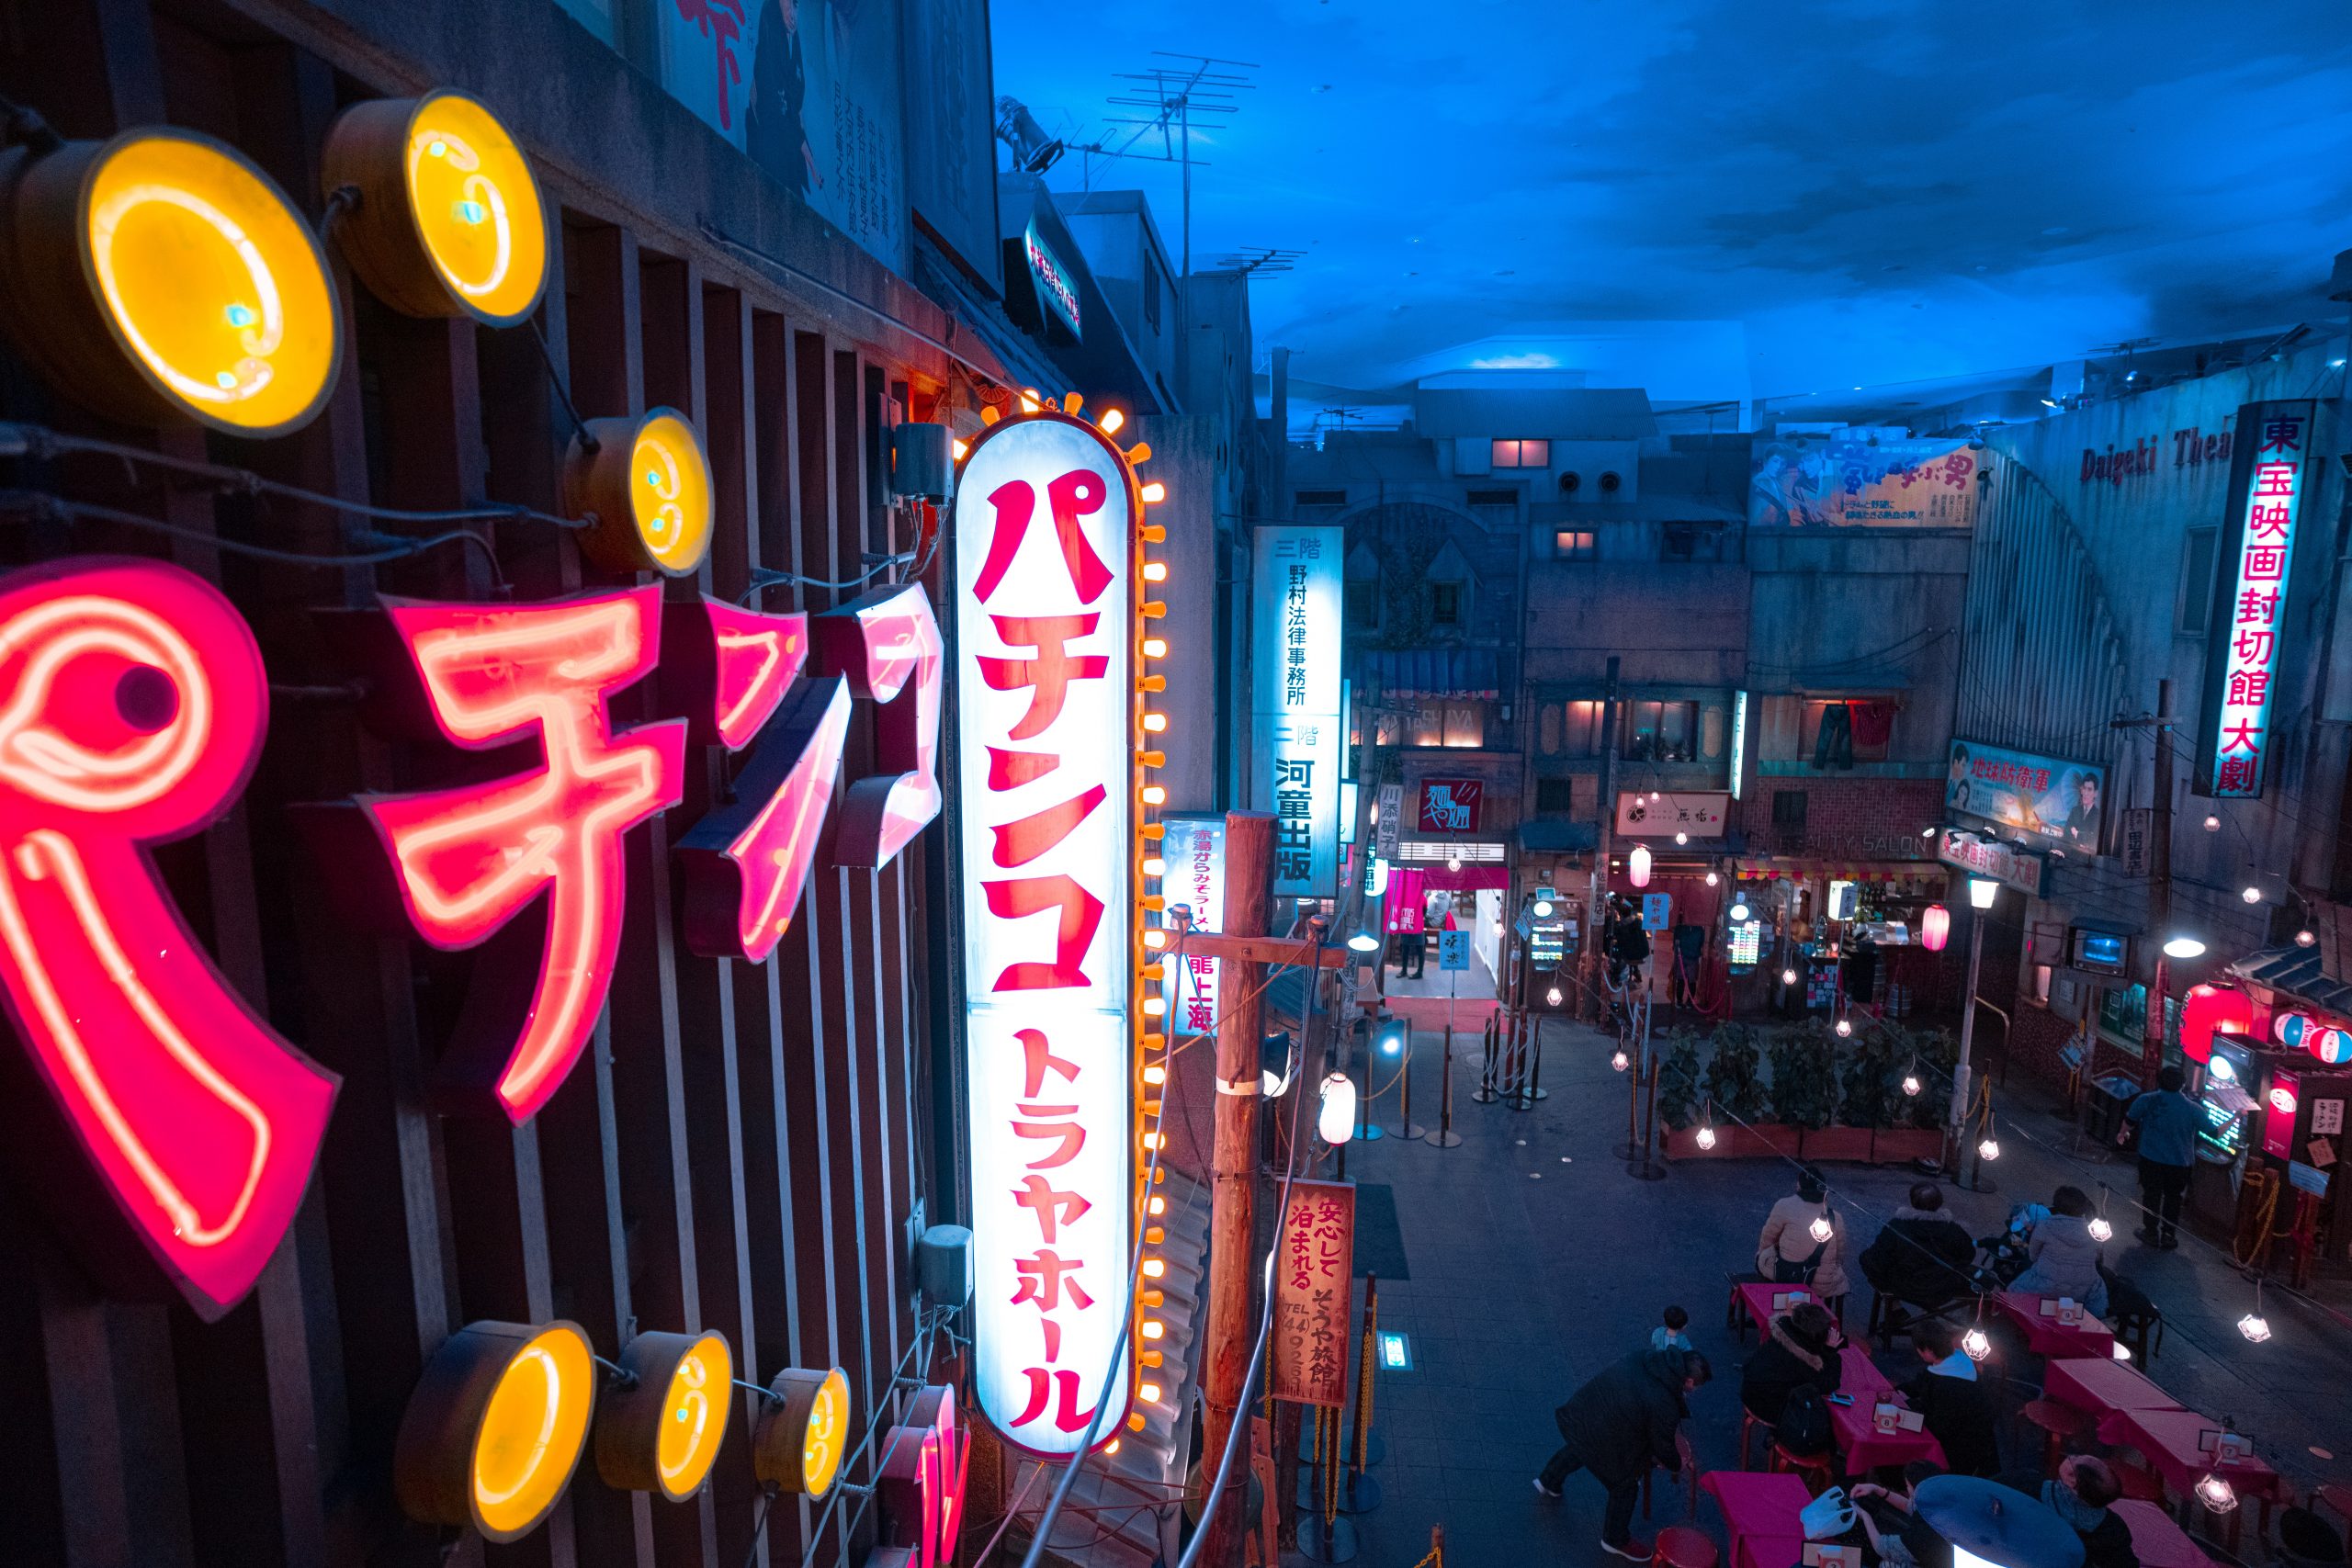 Cool neon lights in Yokohama